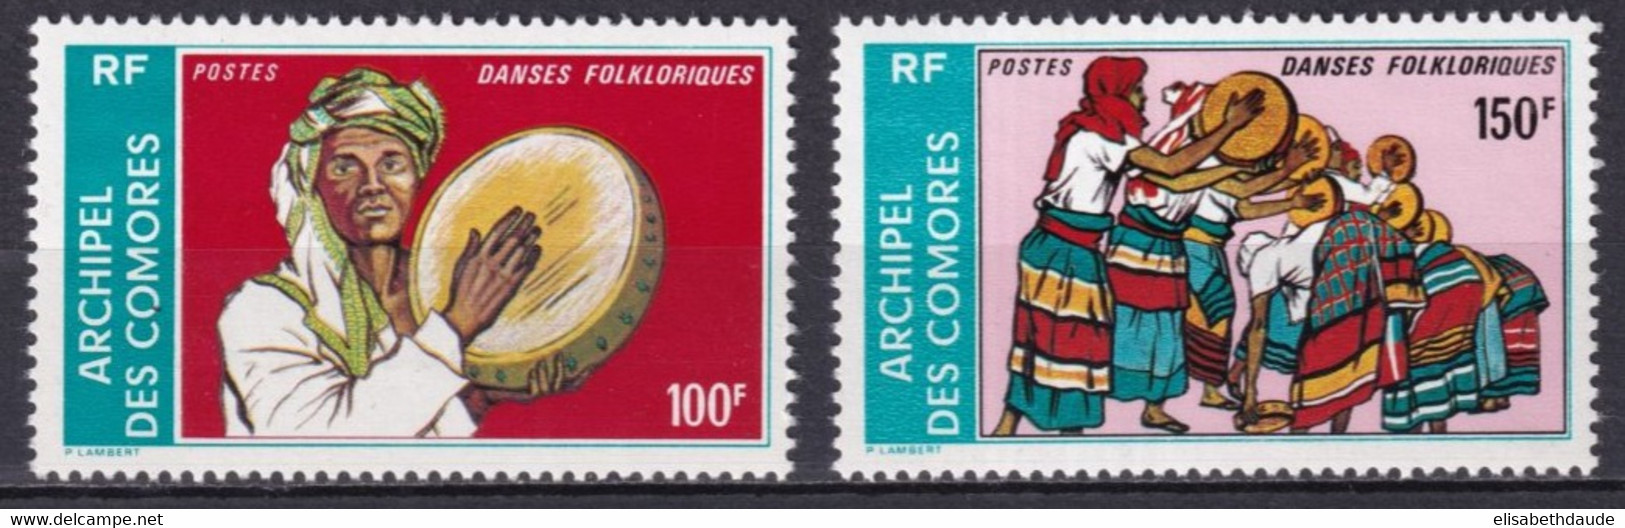 COMORES - RARE DERNIERE SERIE EMISE 1975 - YVERT 104A/B ** MNH  - COTE 2015 = 300 EUR. ! - Ungebraucht